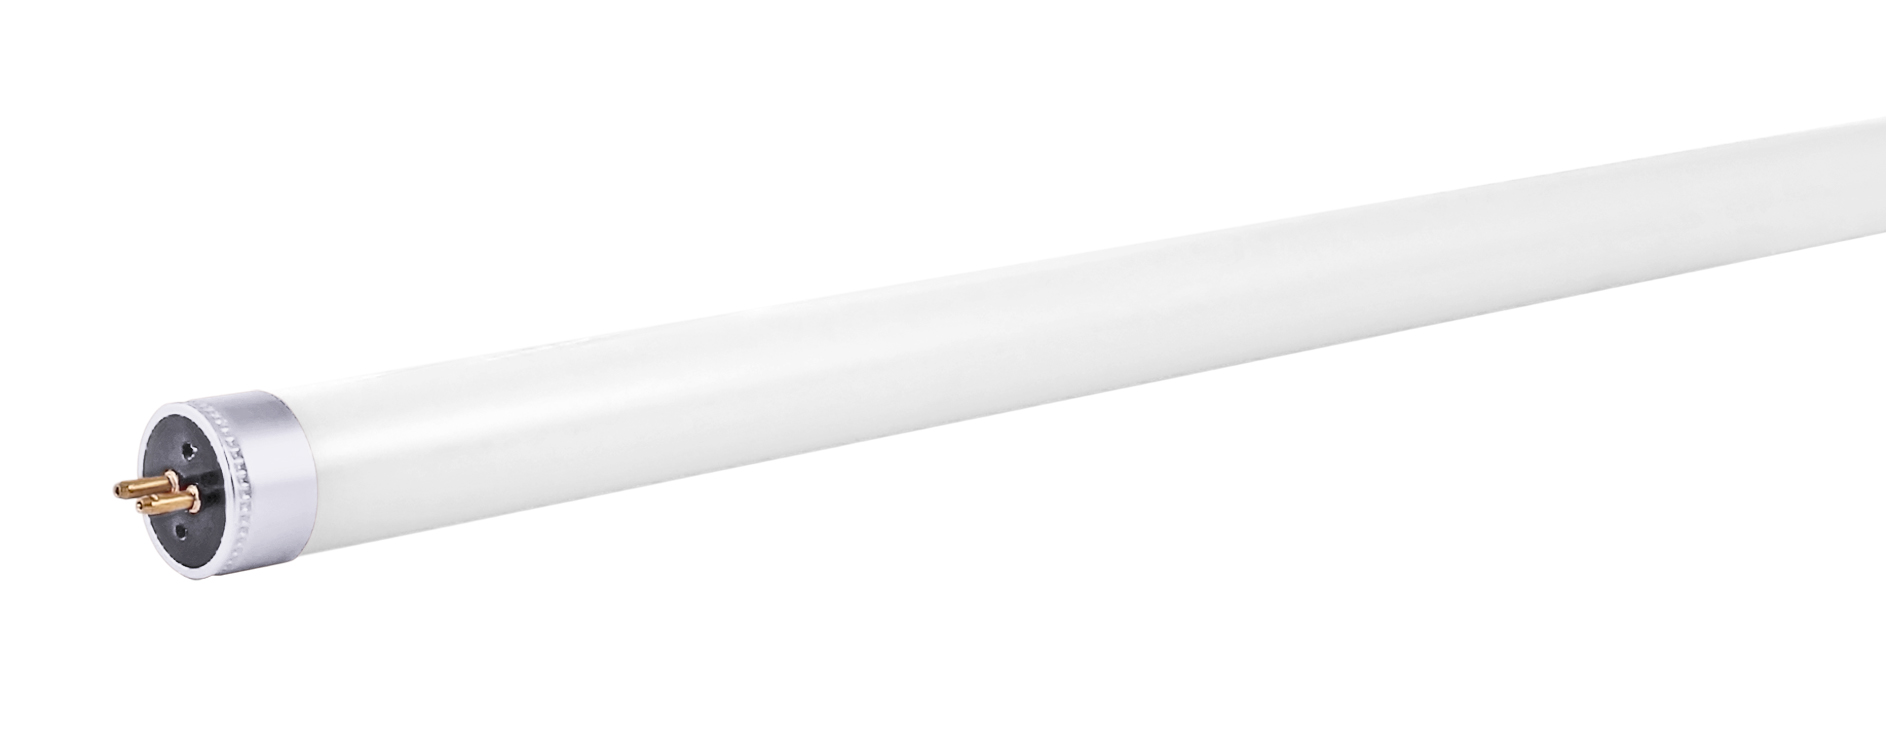 Лампа Светодиодная LED трубка PLED T5 - 600GL 8w FROST 6500K 230V/50Hz (стекло) .5016040 JazzWay